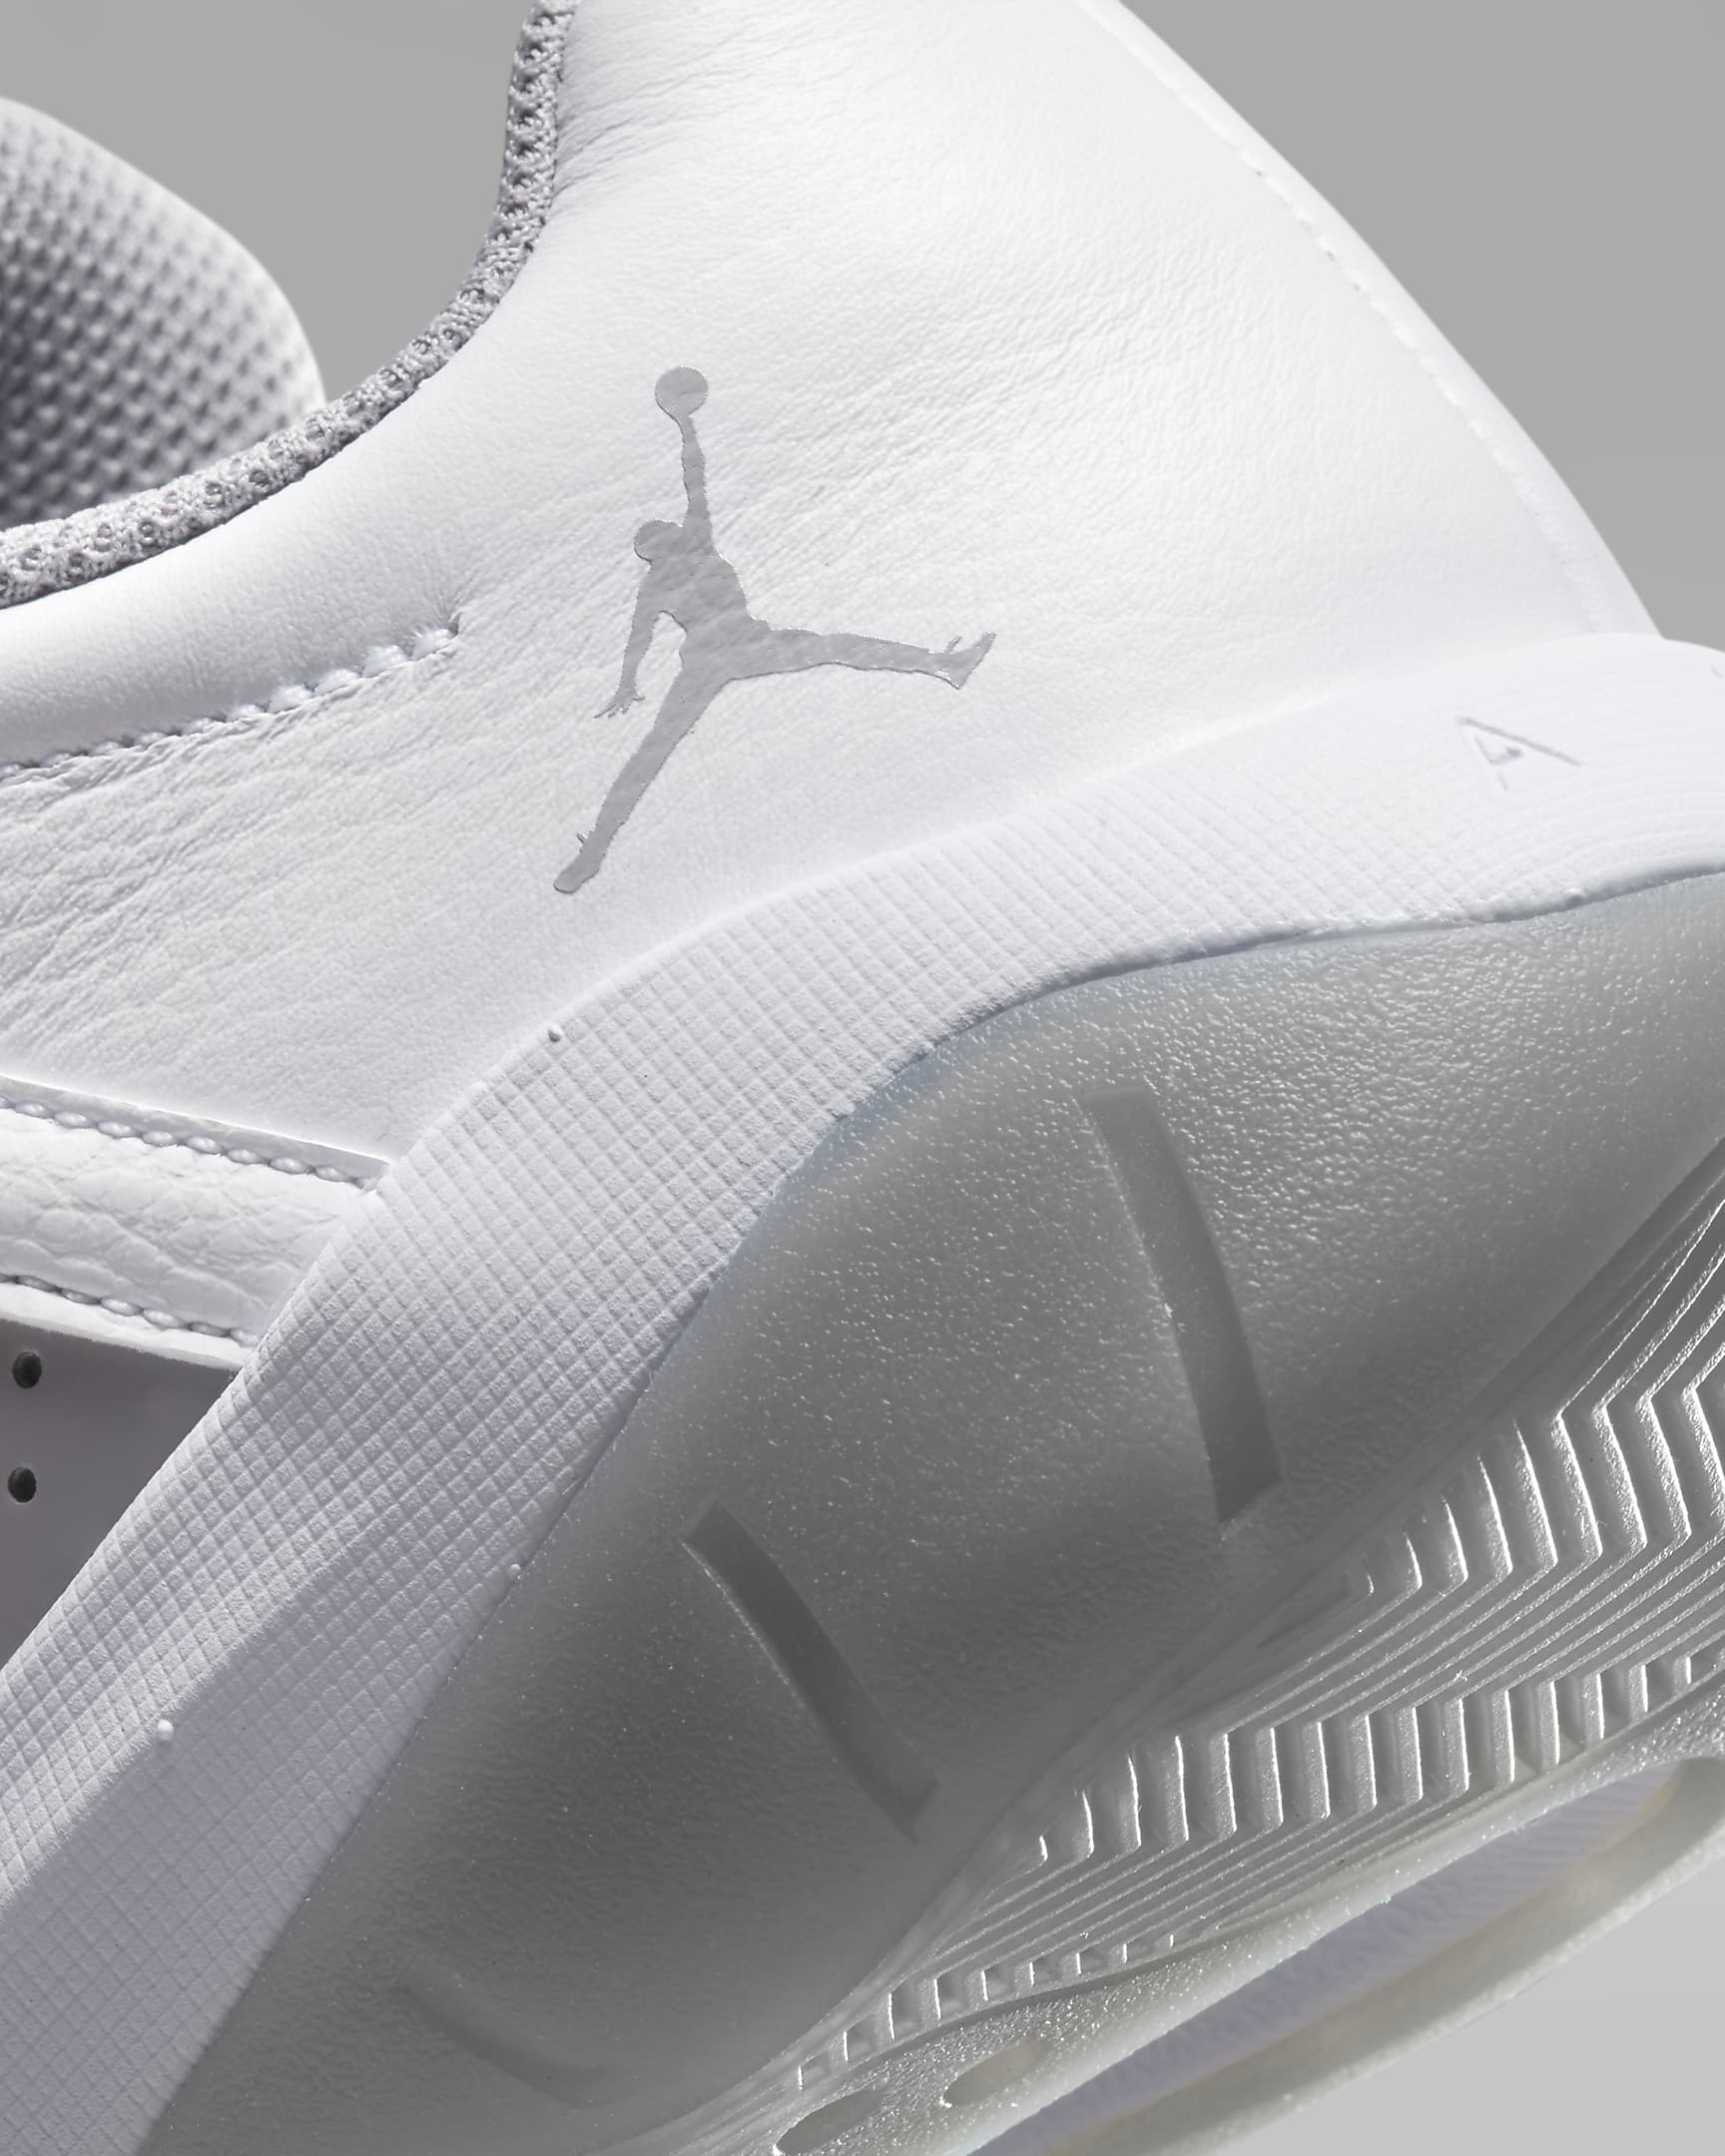 Air Jordan 11 CMFT Low Women's Shoes. Nike SE